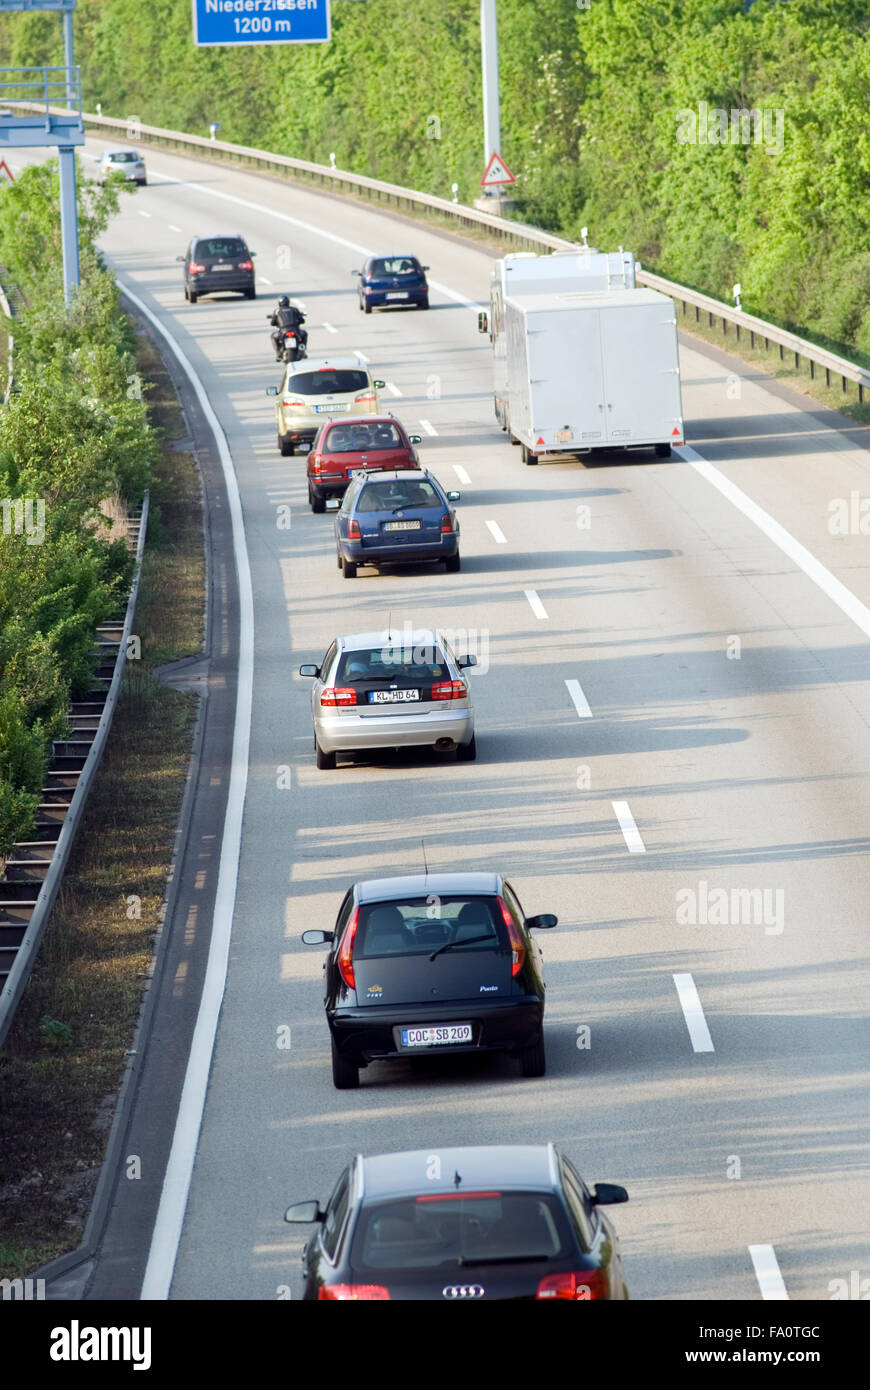 German Freeway with cars Eifel Rhineland-Palatinate Germany Europe Stock Photo